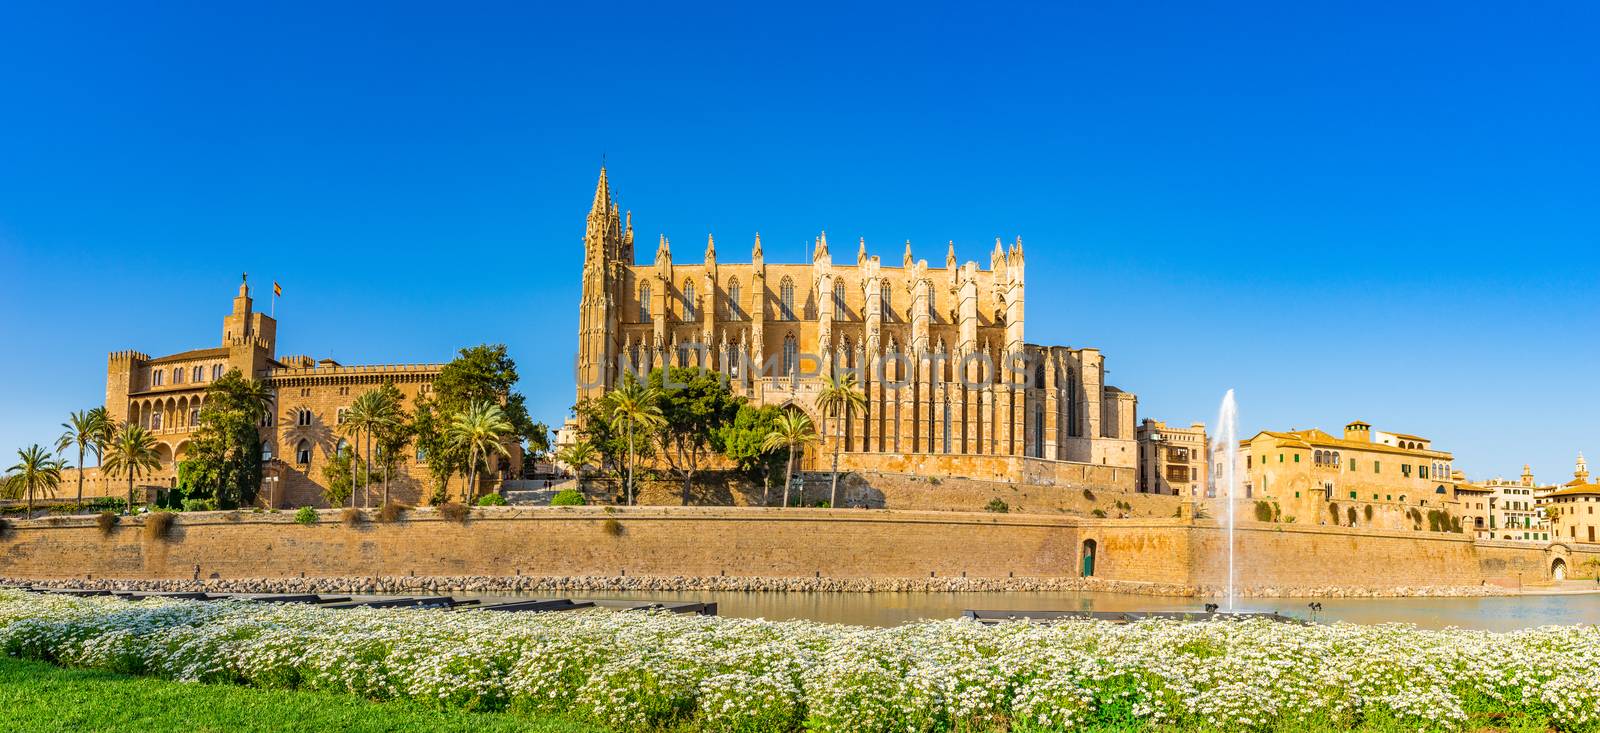 Panorama view of Cathedral La Seu in Palma de Mallorca city, Spain by Vulcano